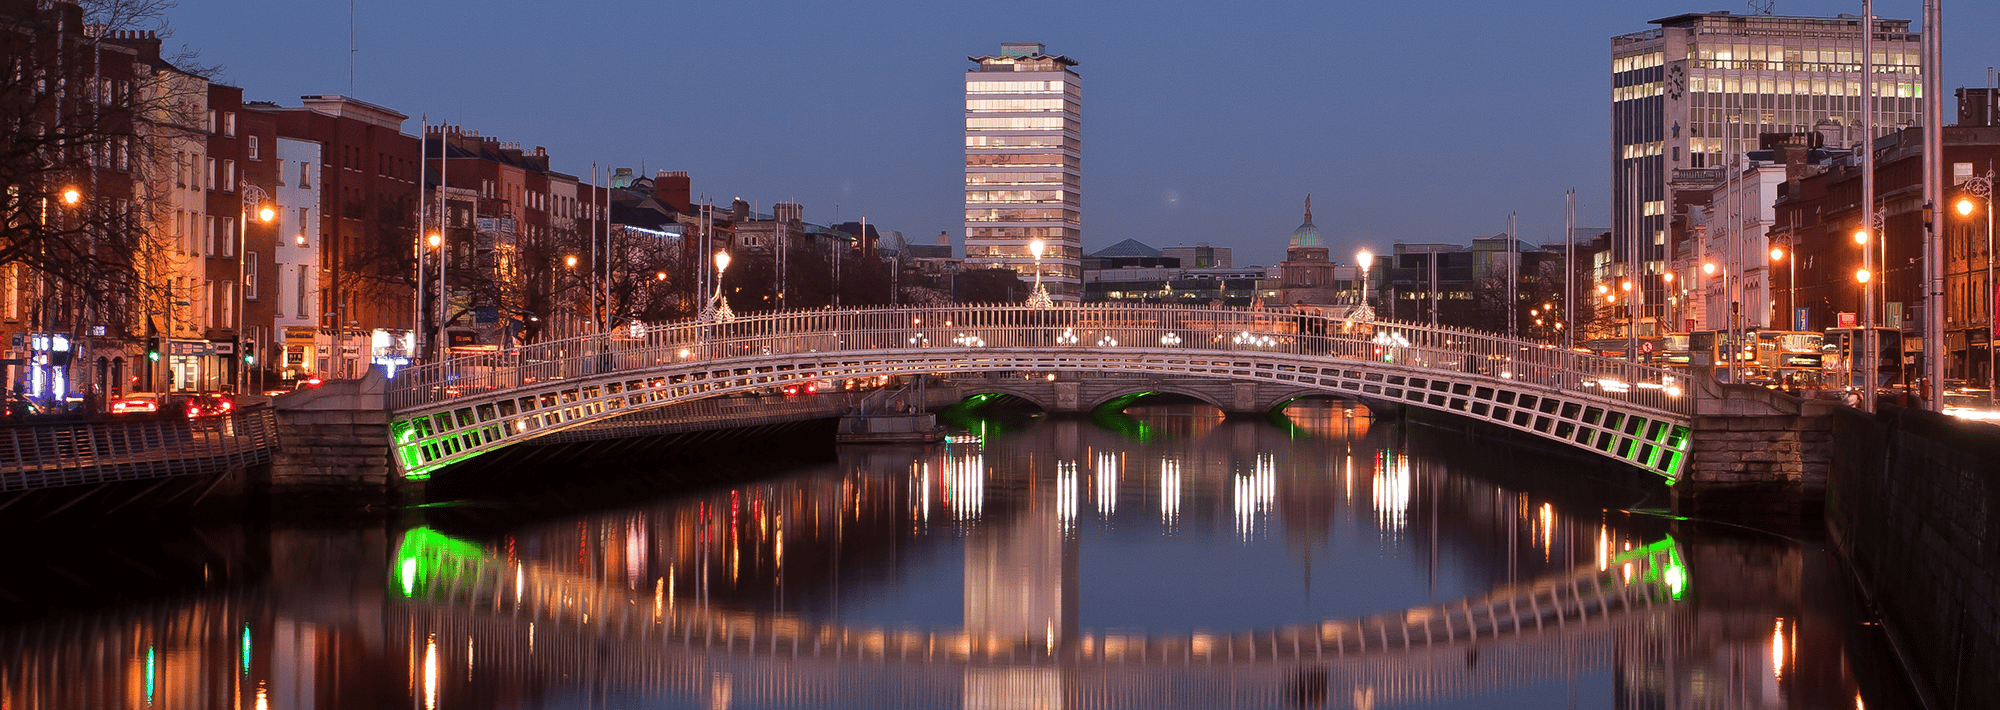 Ireland2022-Dublin-evening-homepage